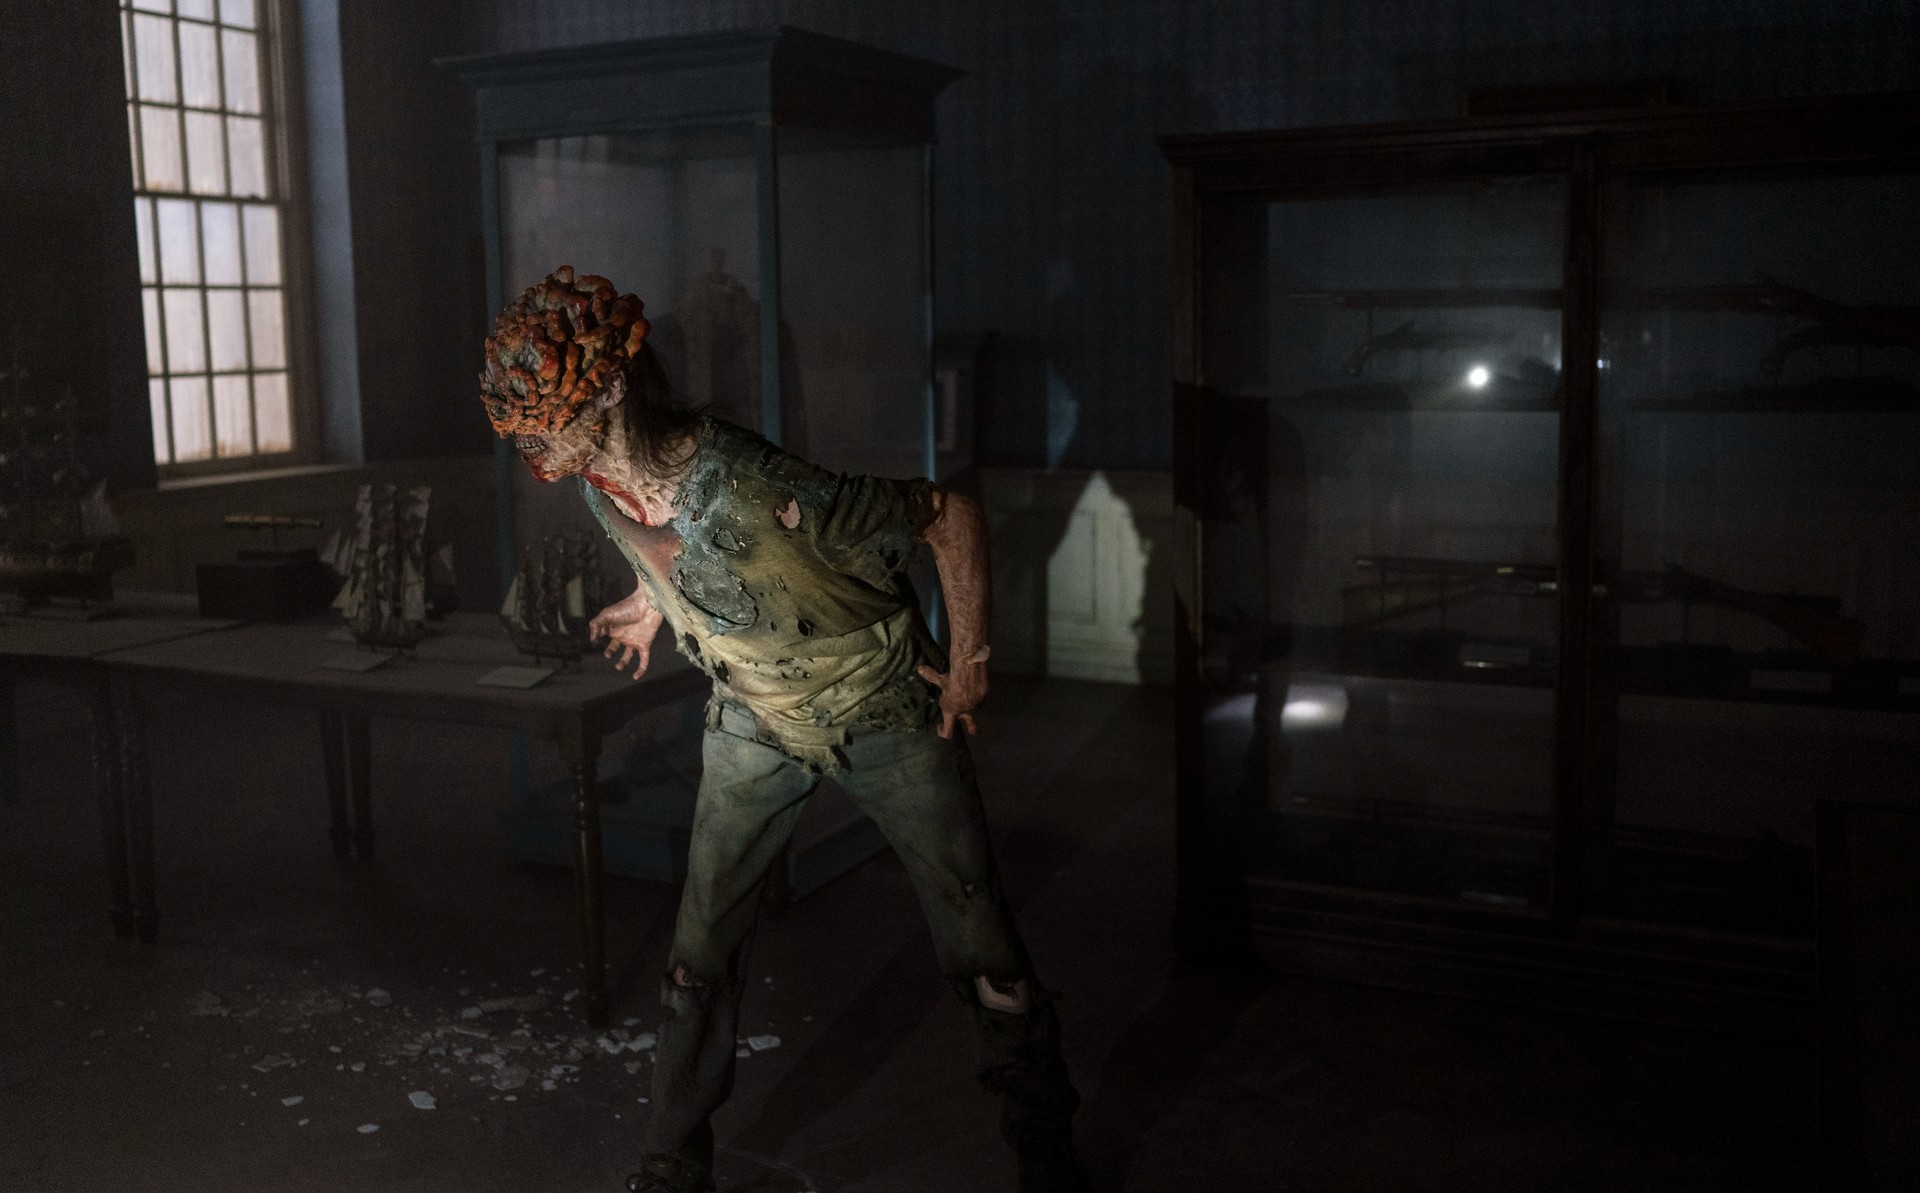 The Last of Us Part II: Abby – Mondo